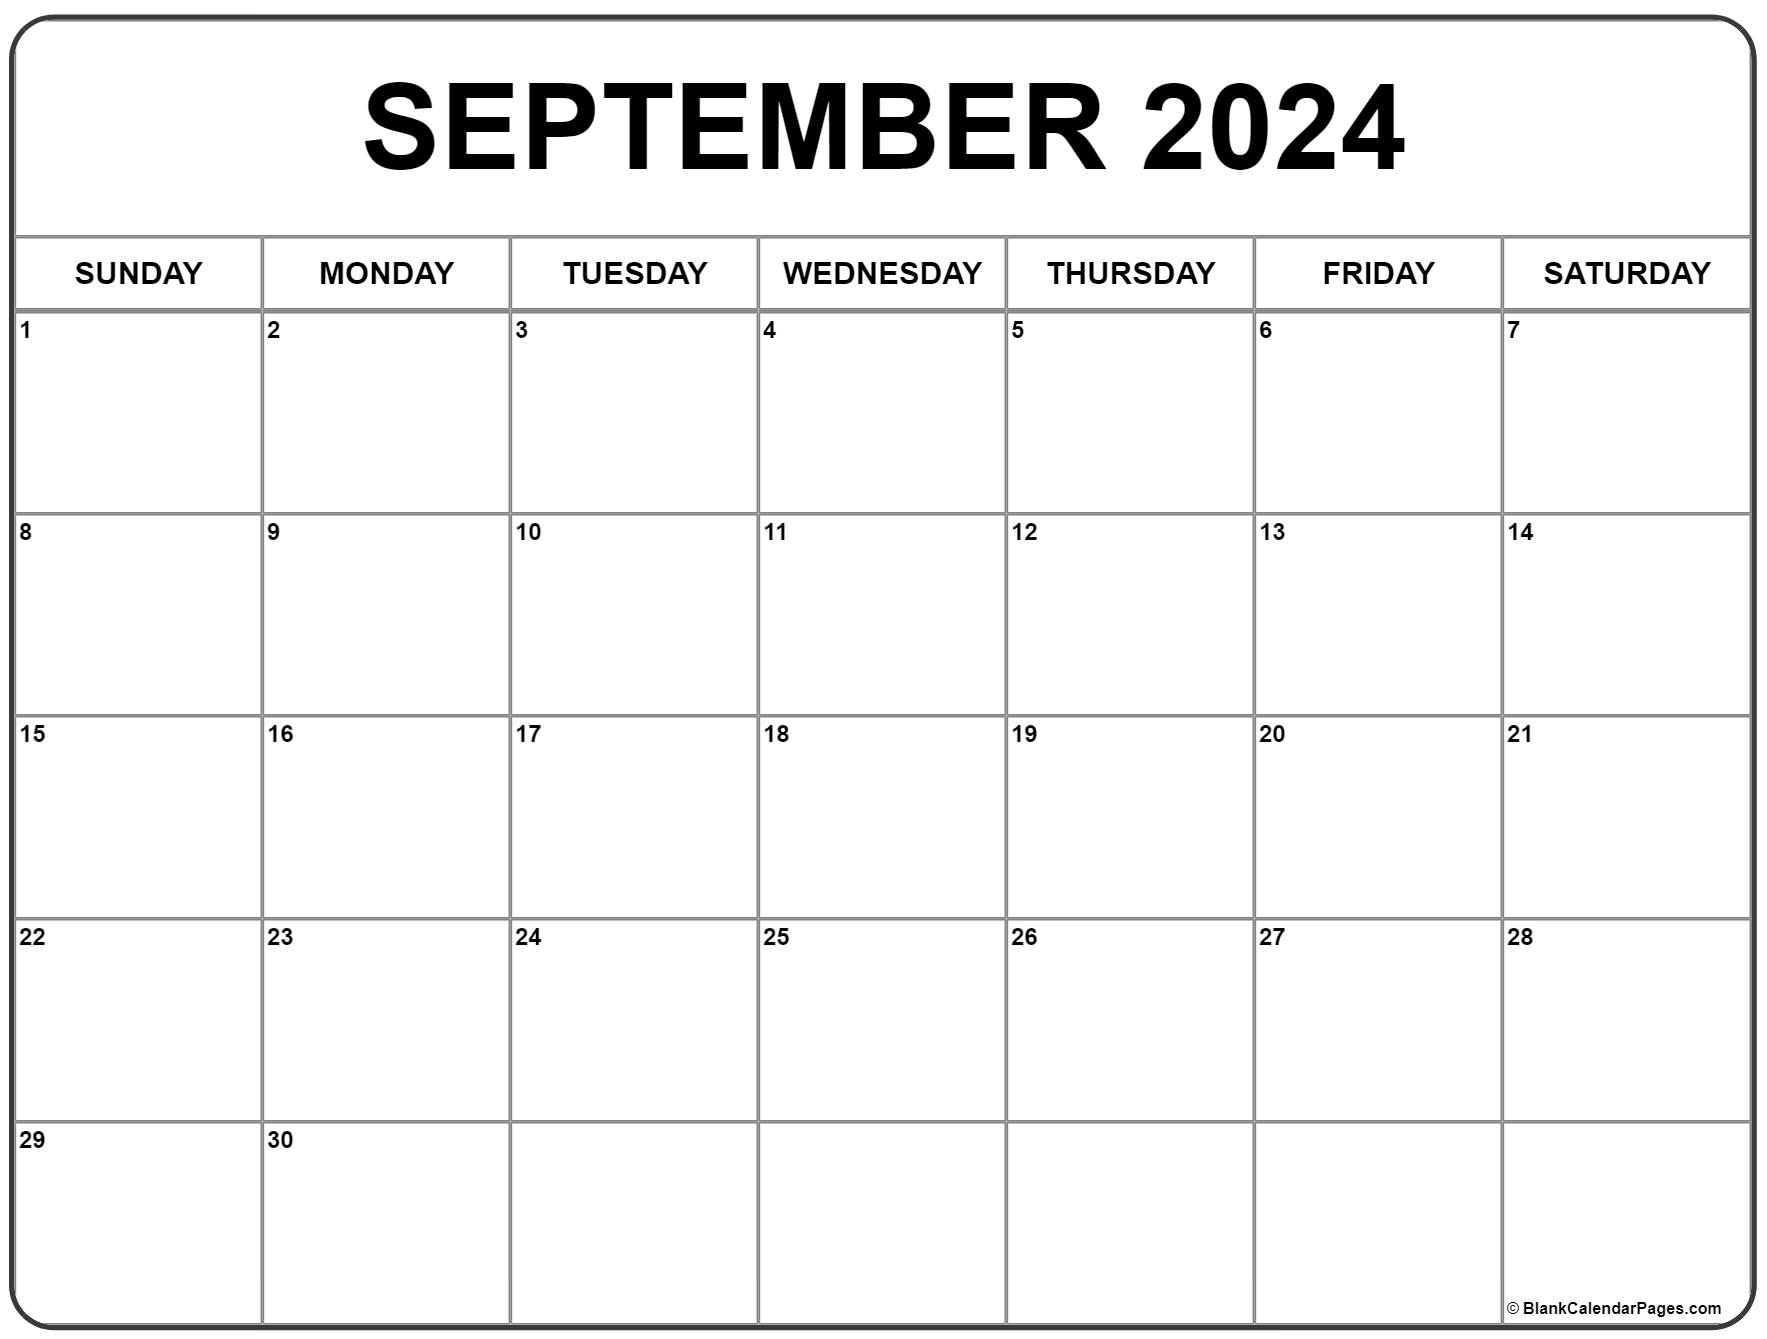 September Monthly Calendar 2022 September 2022 Calendar | Free Printable Calendar Templates